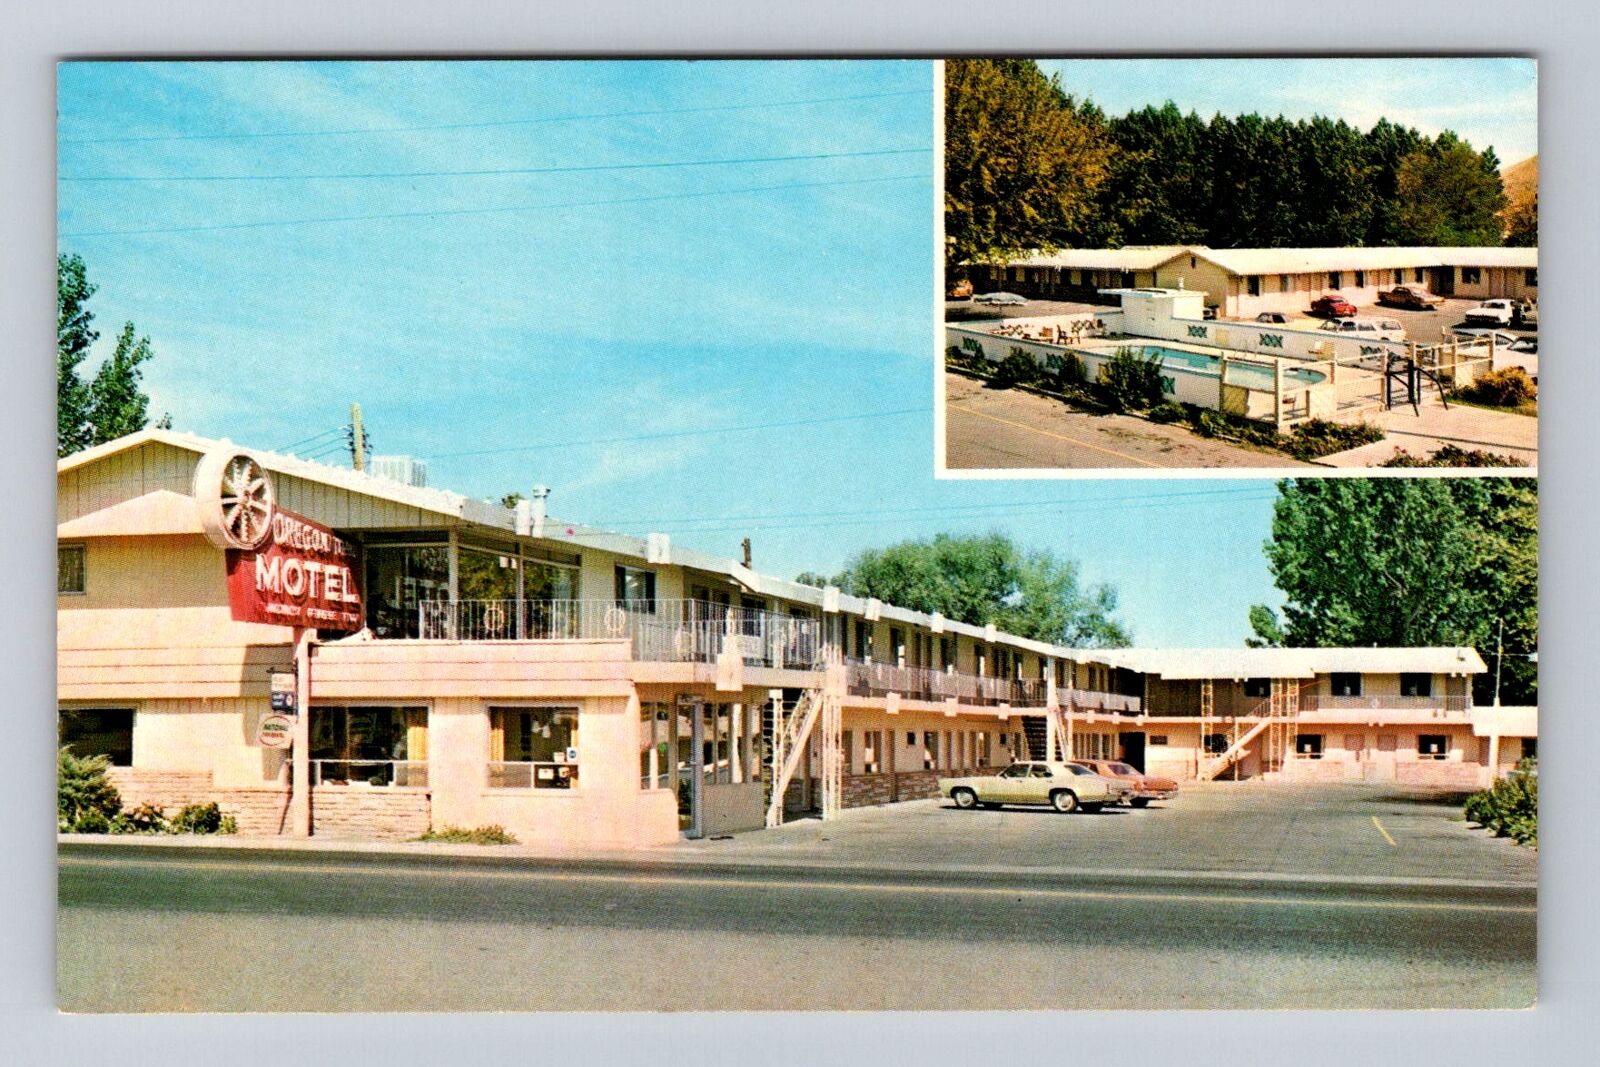 Baker OR-Oregon, Oregon Trail Motel Advertising, Vintage Souvenir Postcard